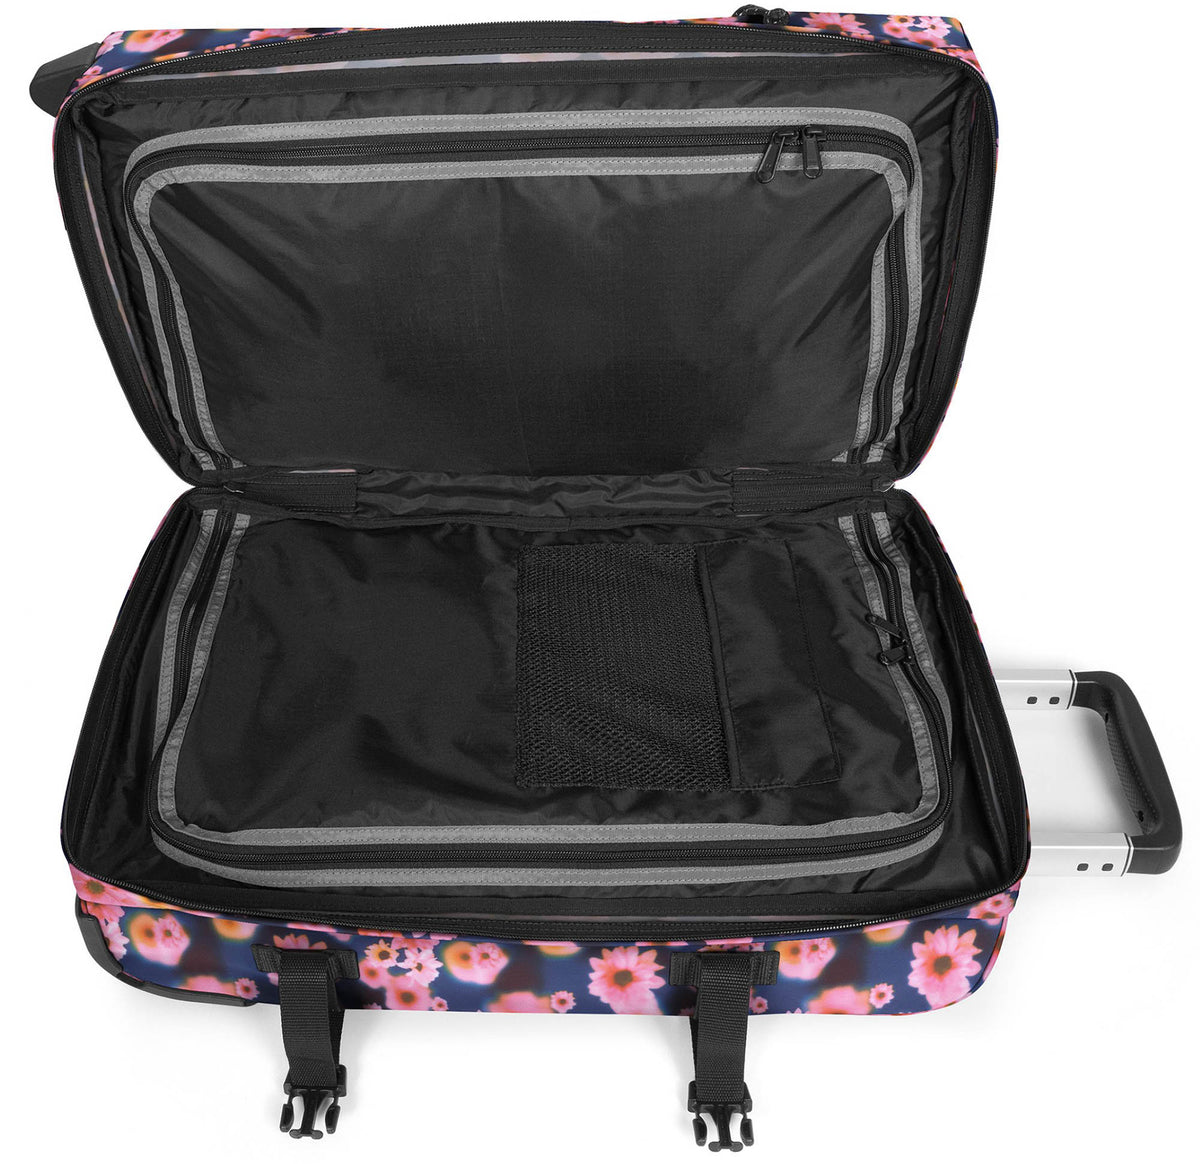 Eastpak Transit'R S Suitcase - Soft Navy